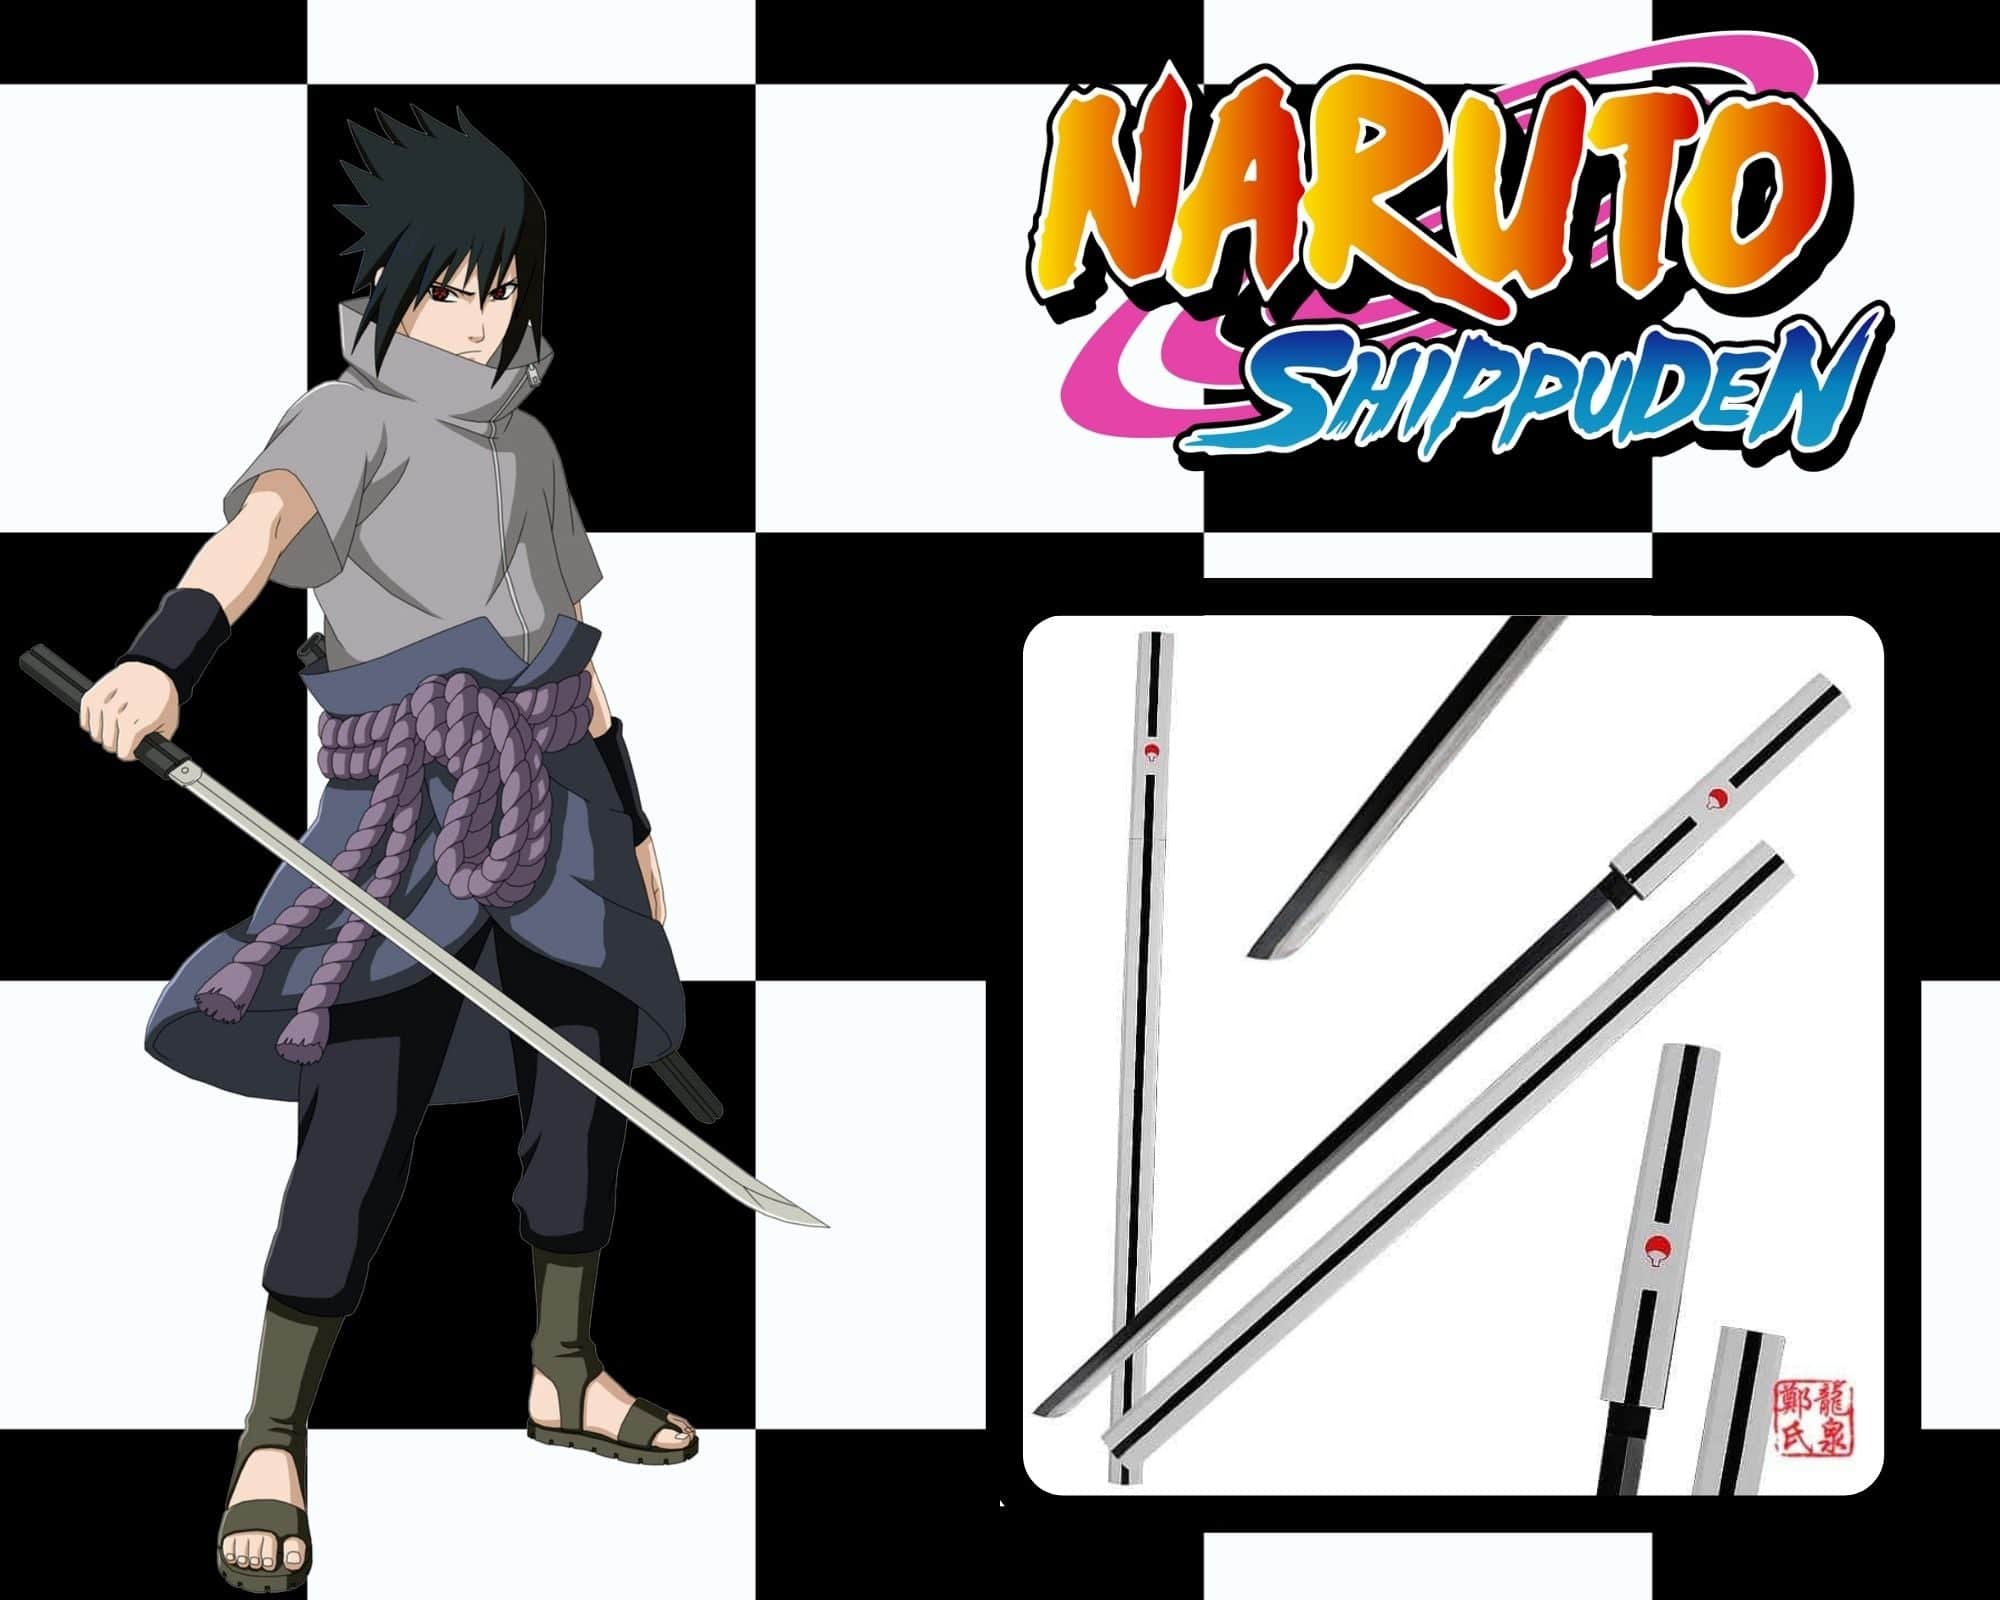 katana de Sasuke dans le manga Naruto